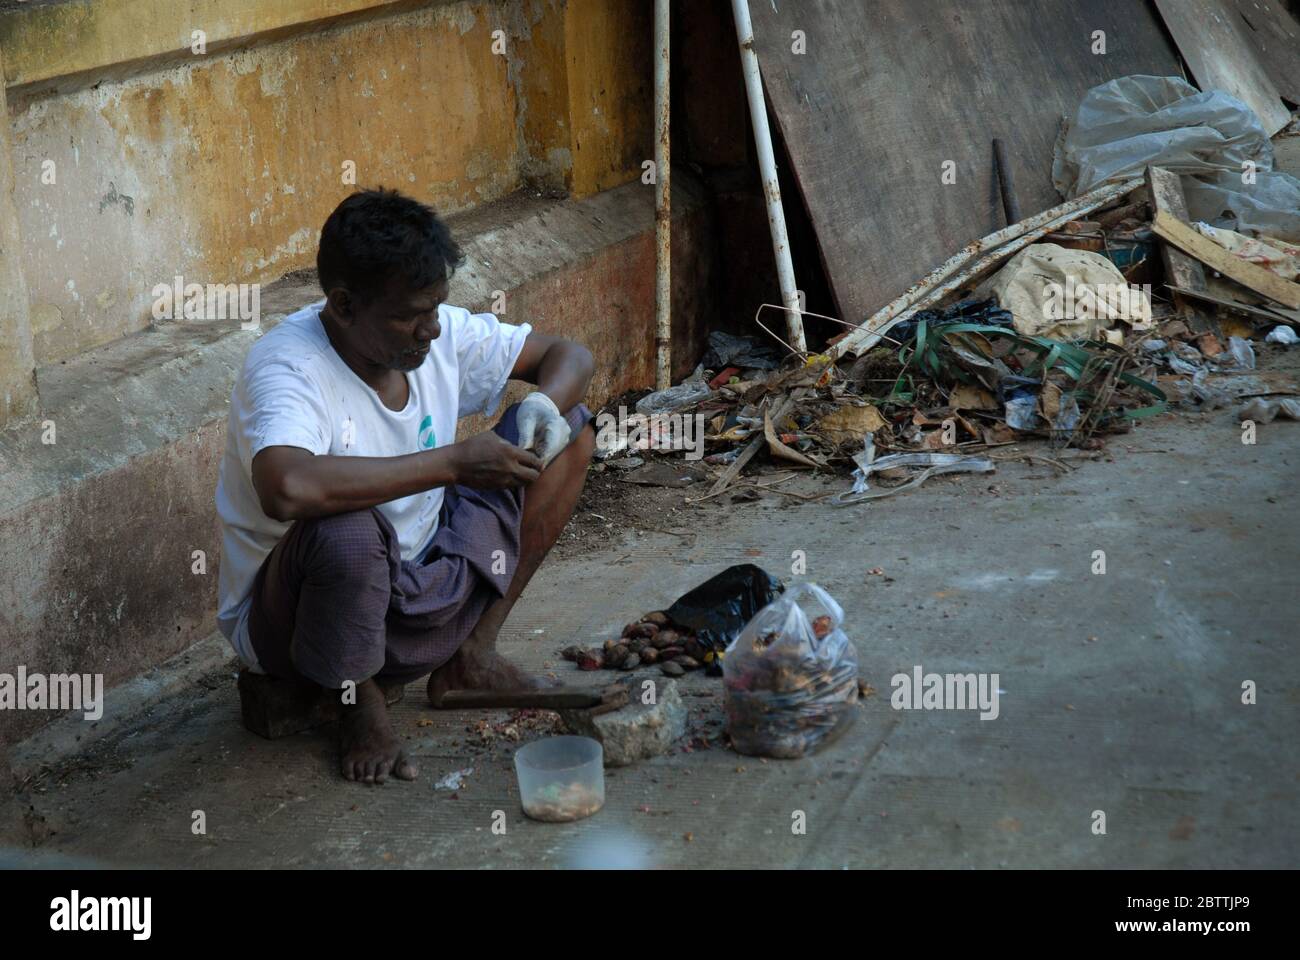 Man cracking open betel nuts on the street in Yangon, Myanmar, Asia Stock Photo